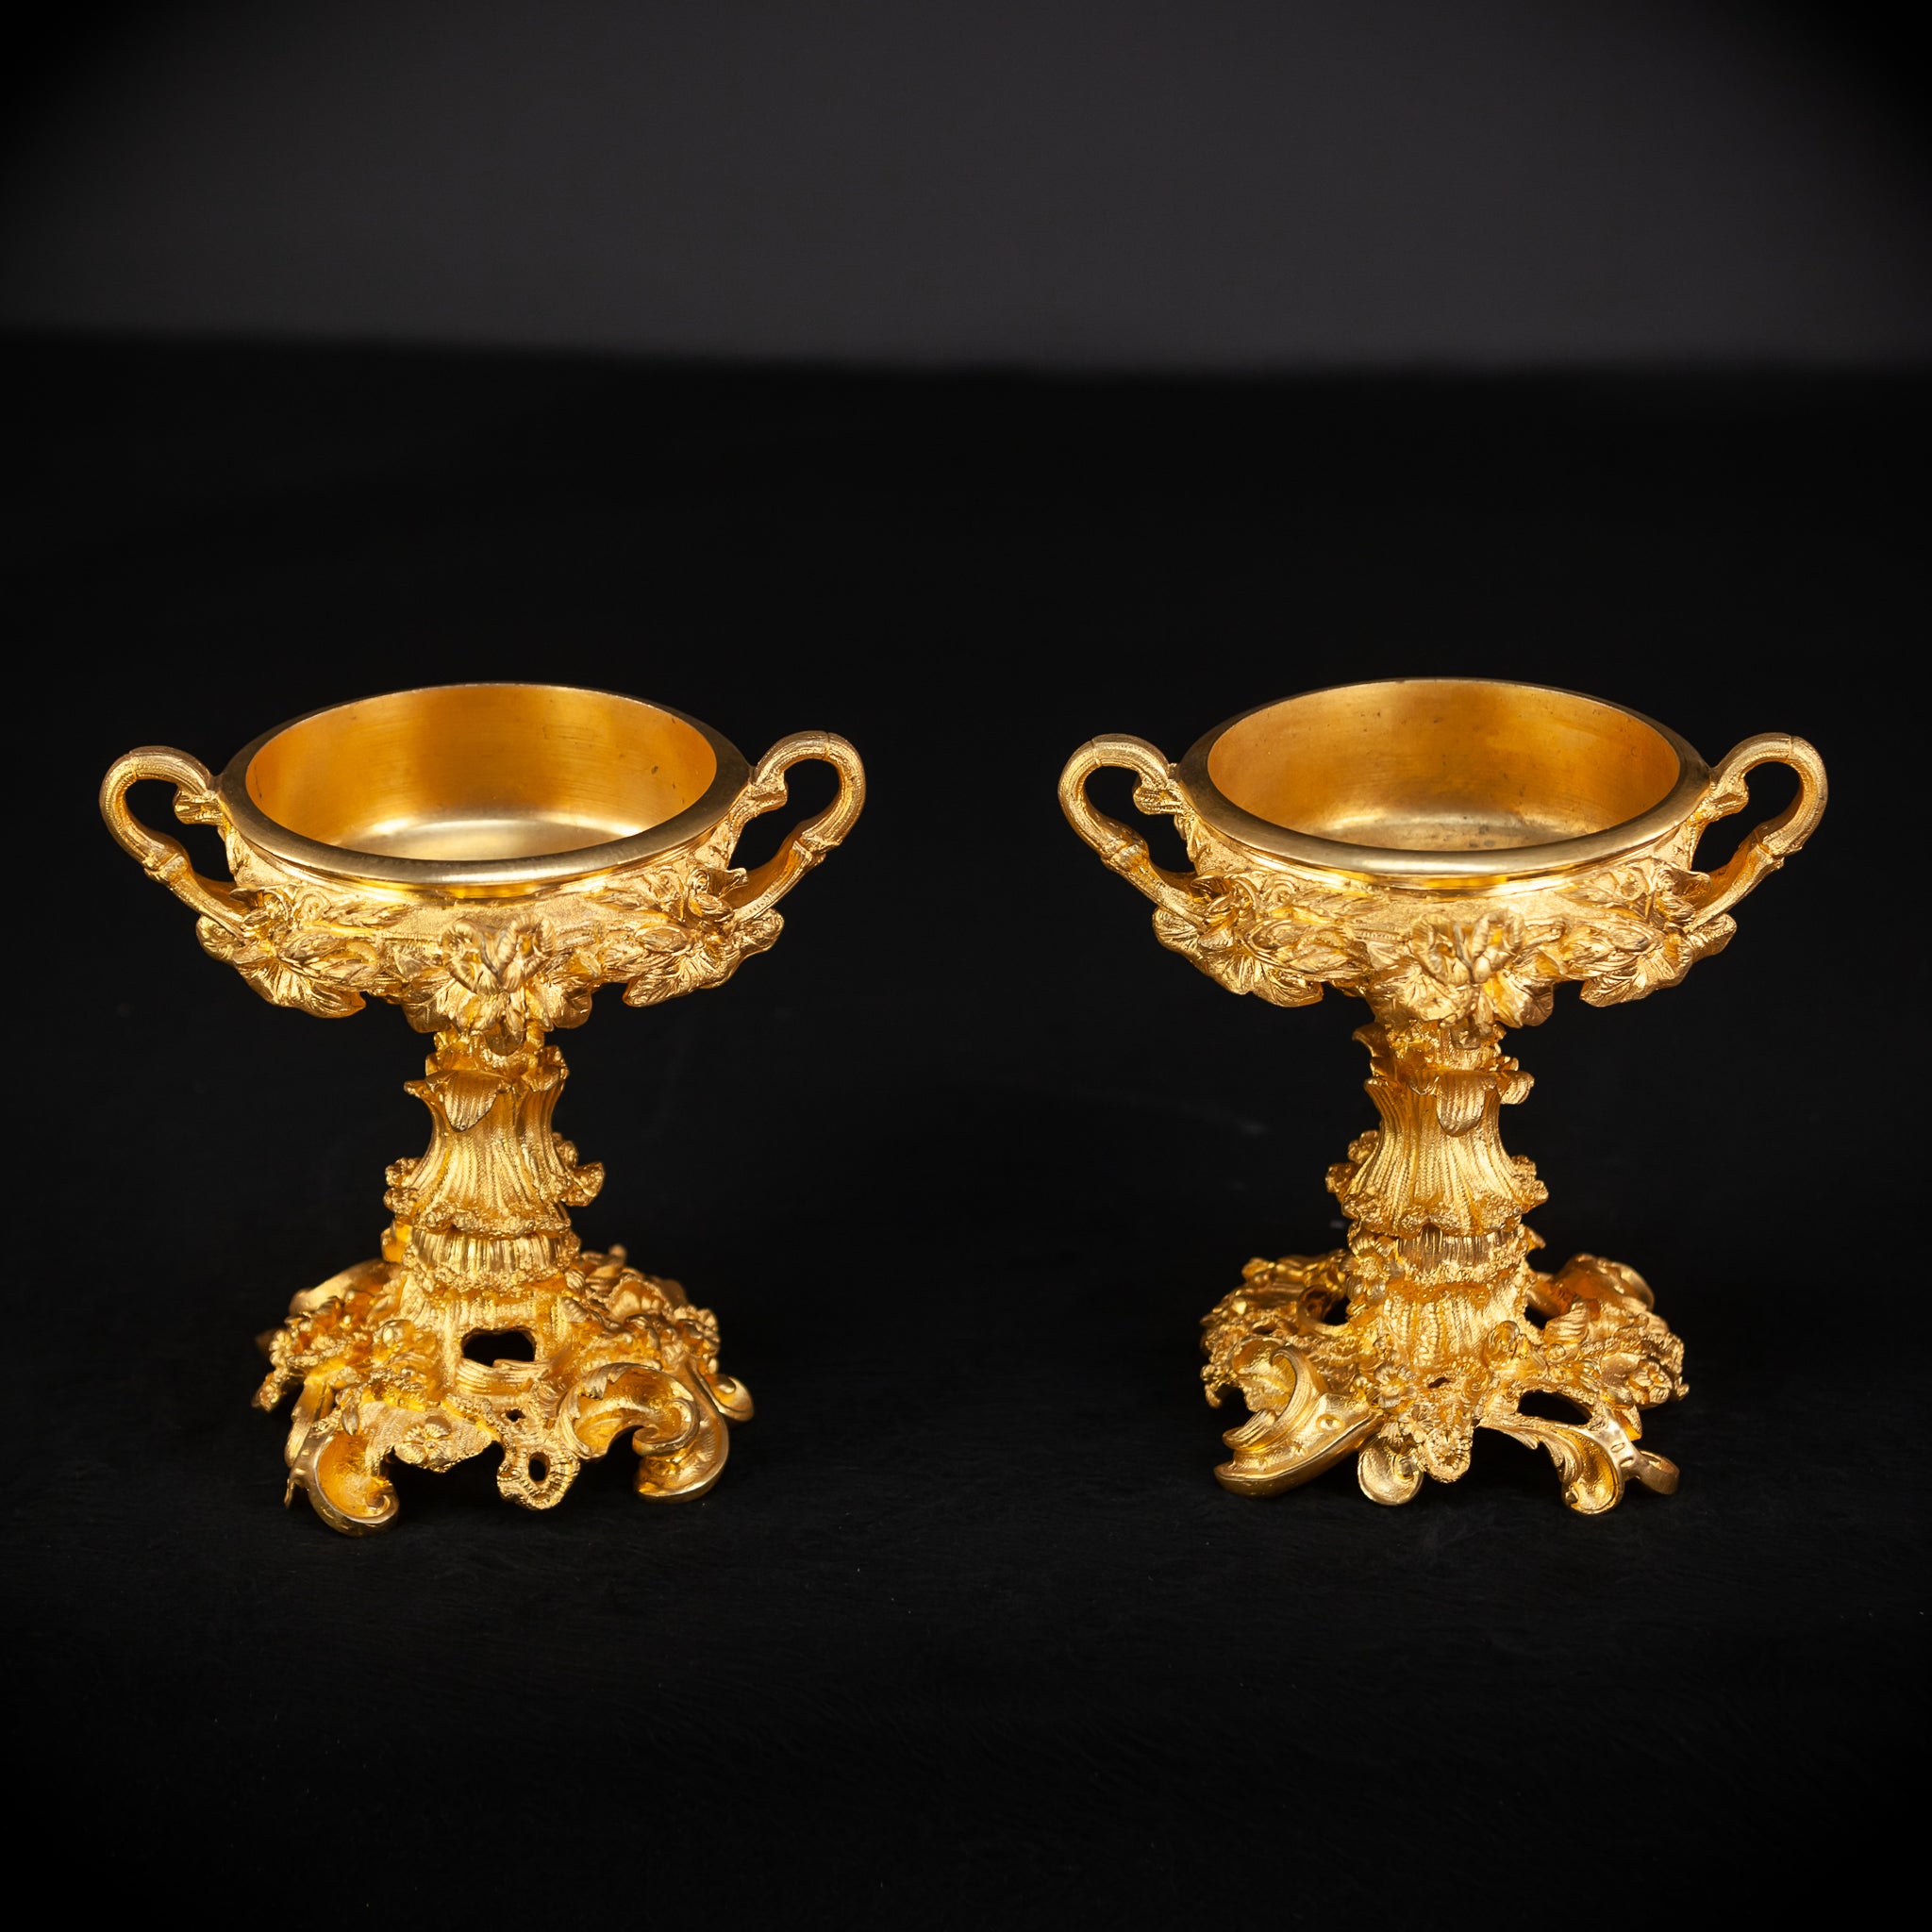 Pair of Urns | Two Antique Gilt Cassolettes | 7.3"